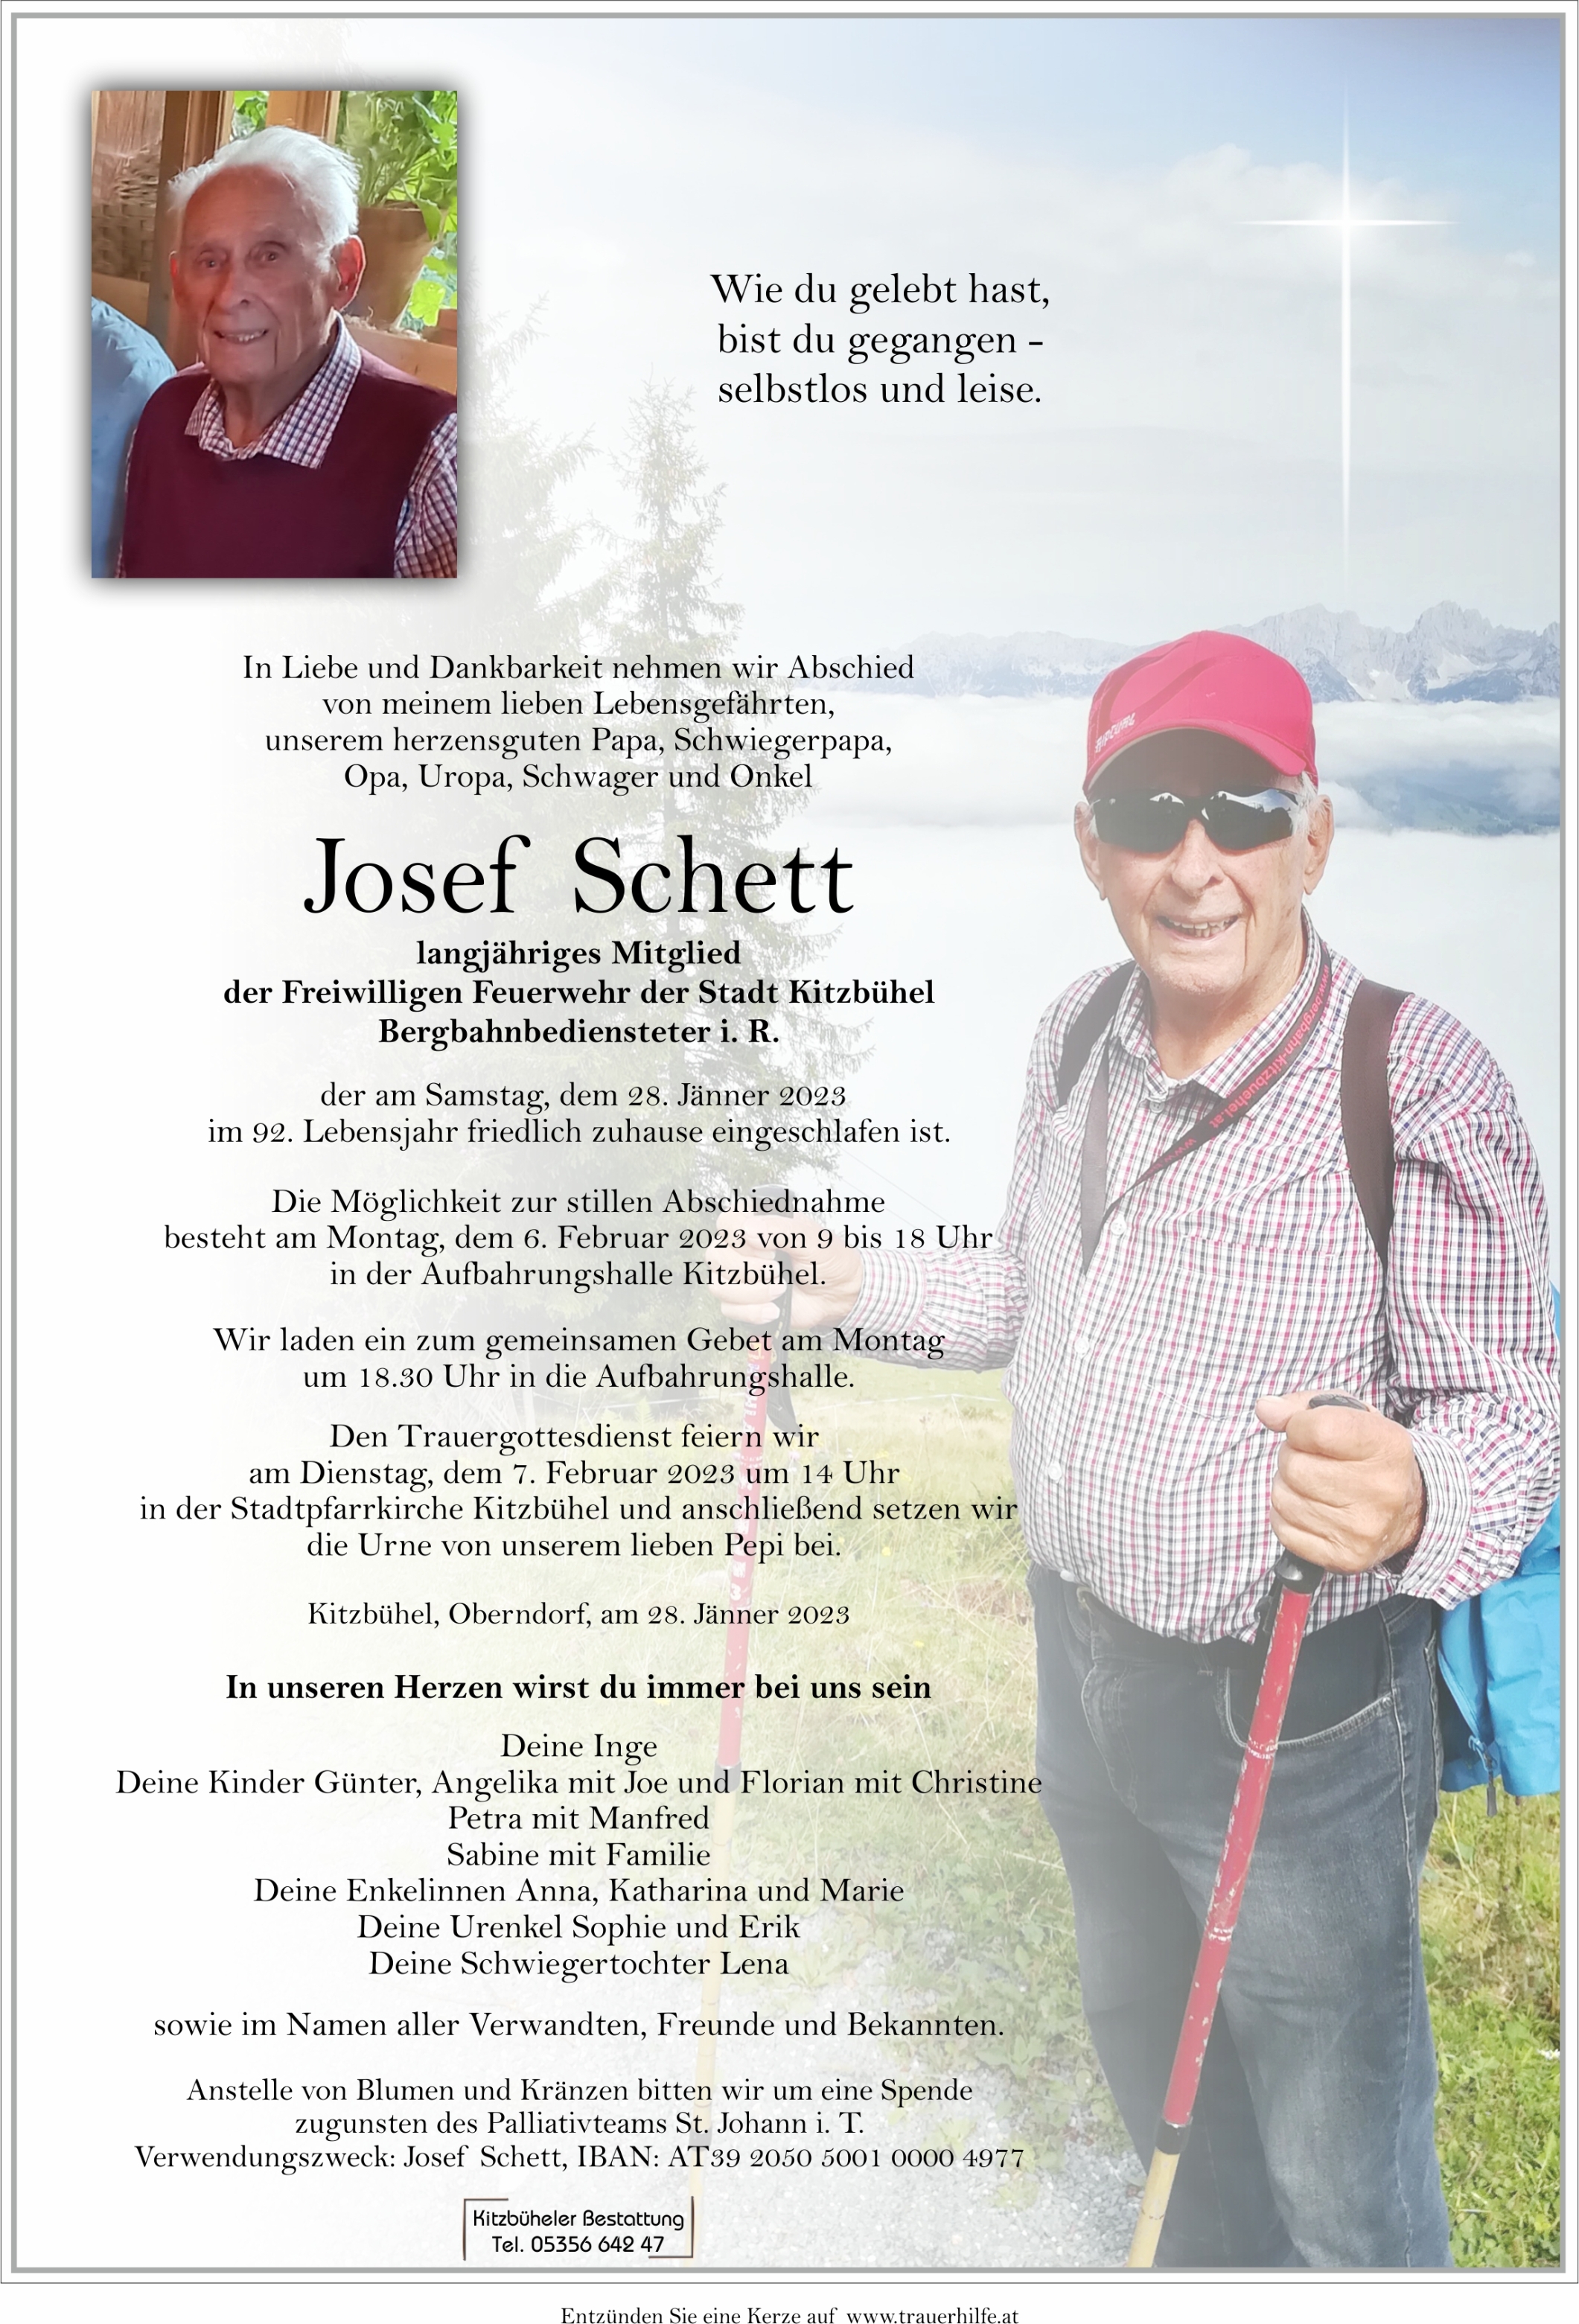 Josef Schett